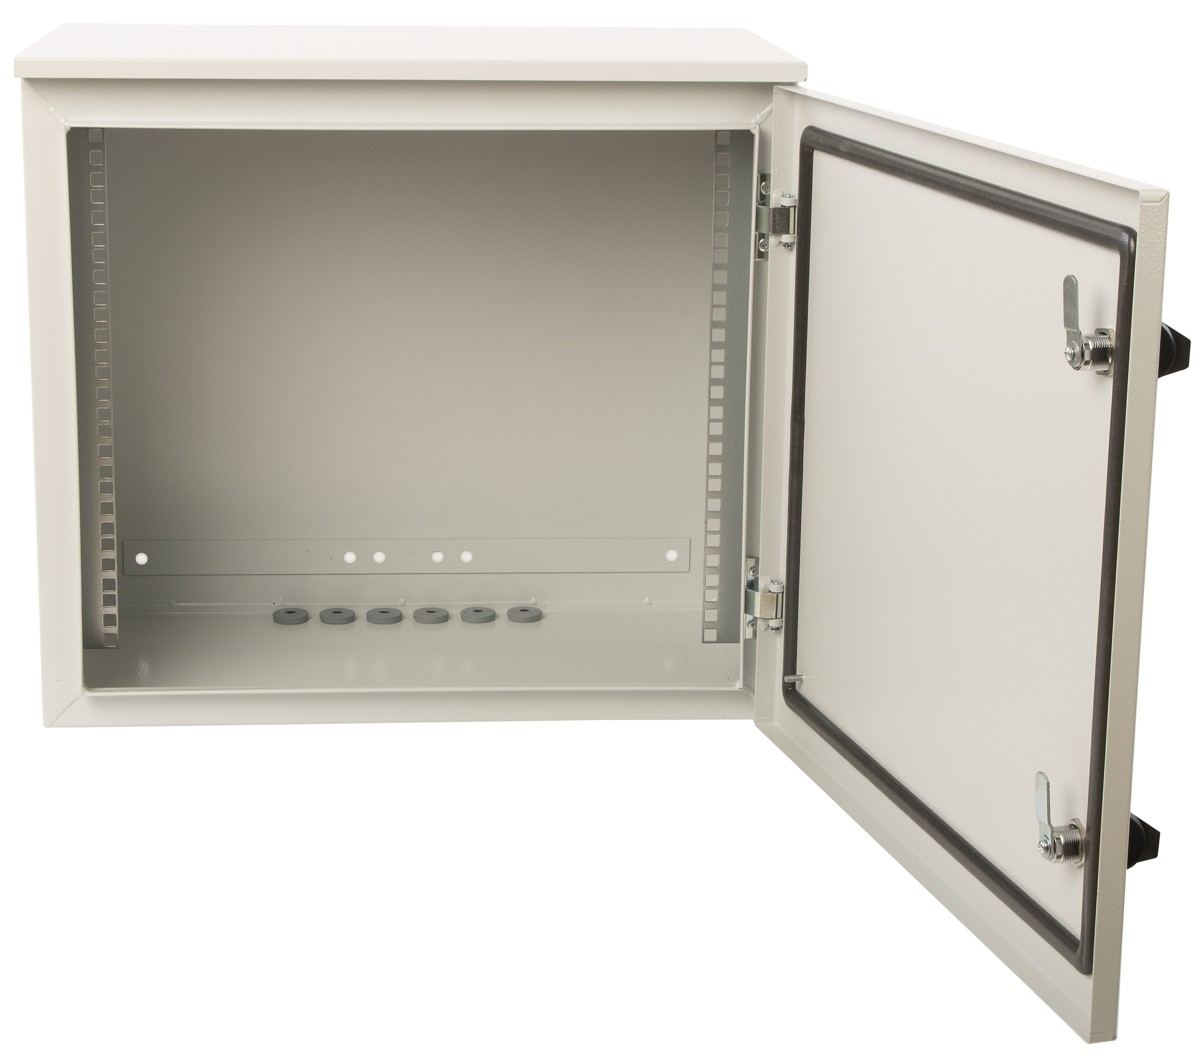 Masterlan outdoor cabinet 19" 9U/320mm, assembled, IP65